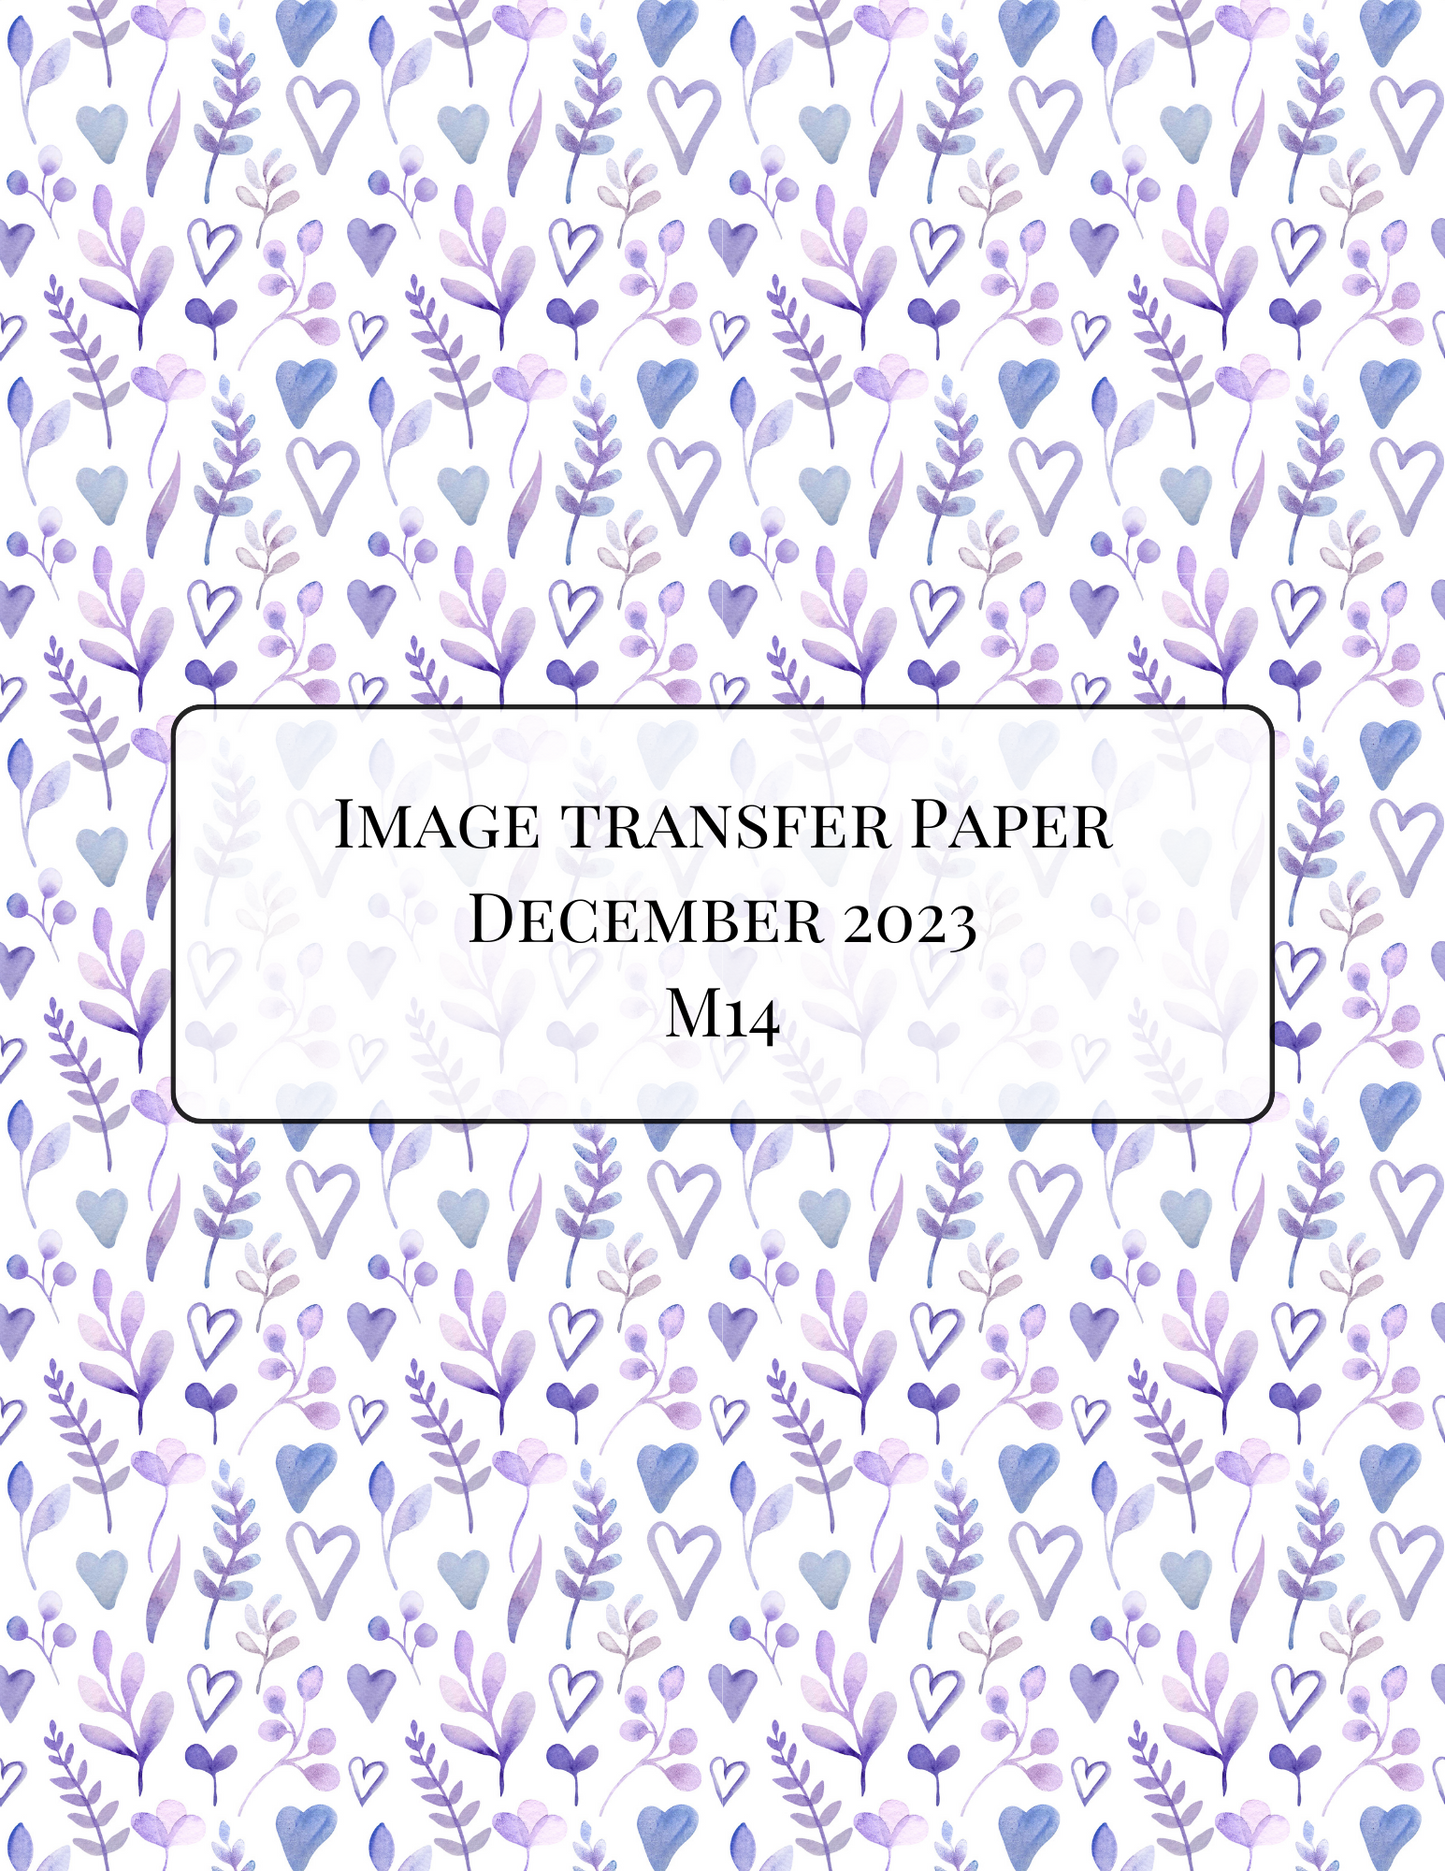 M14 Transfer Paper - December 2023 Launch